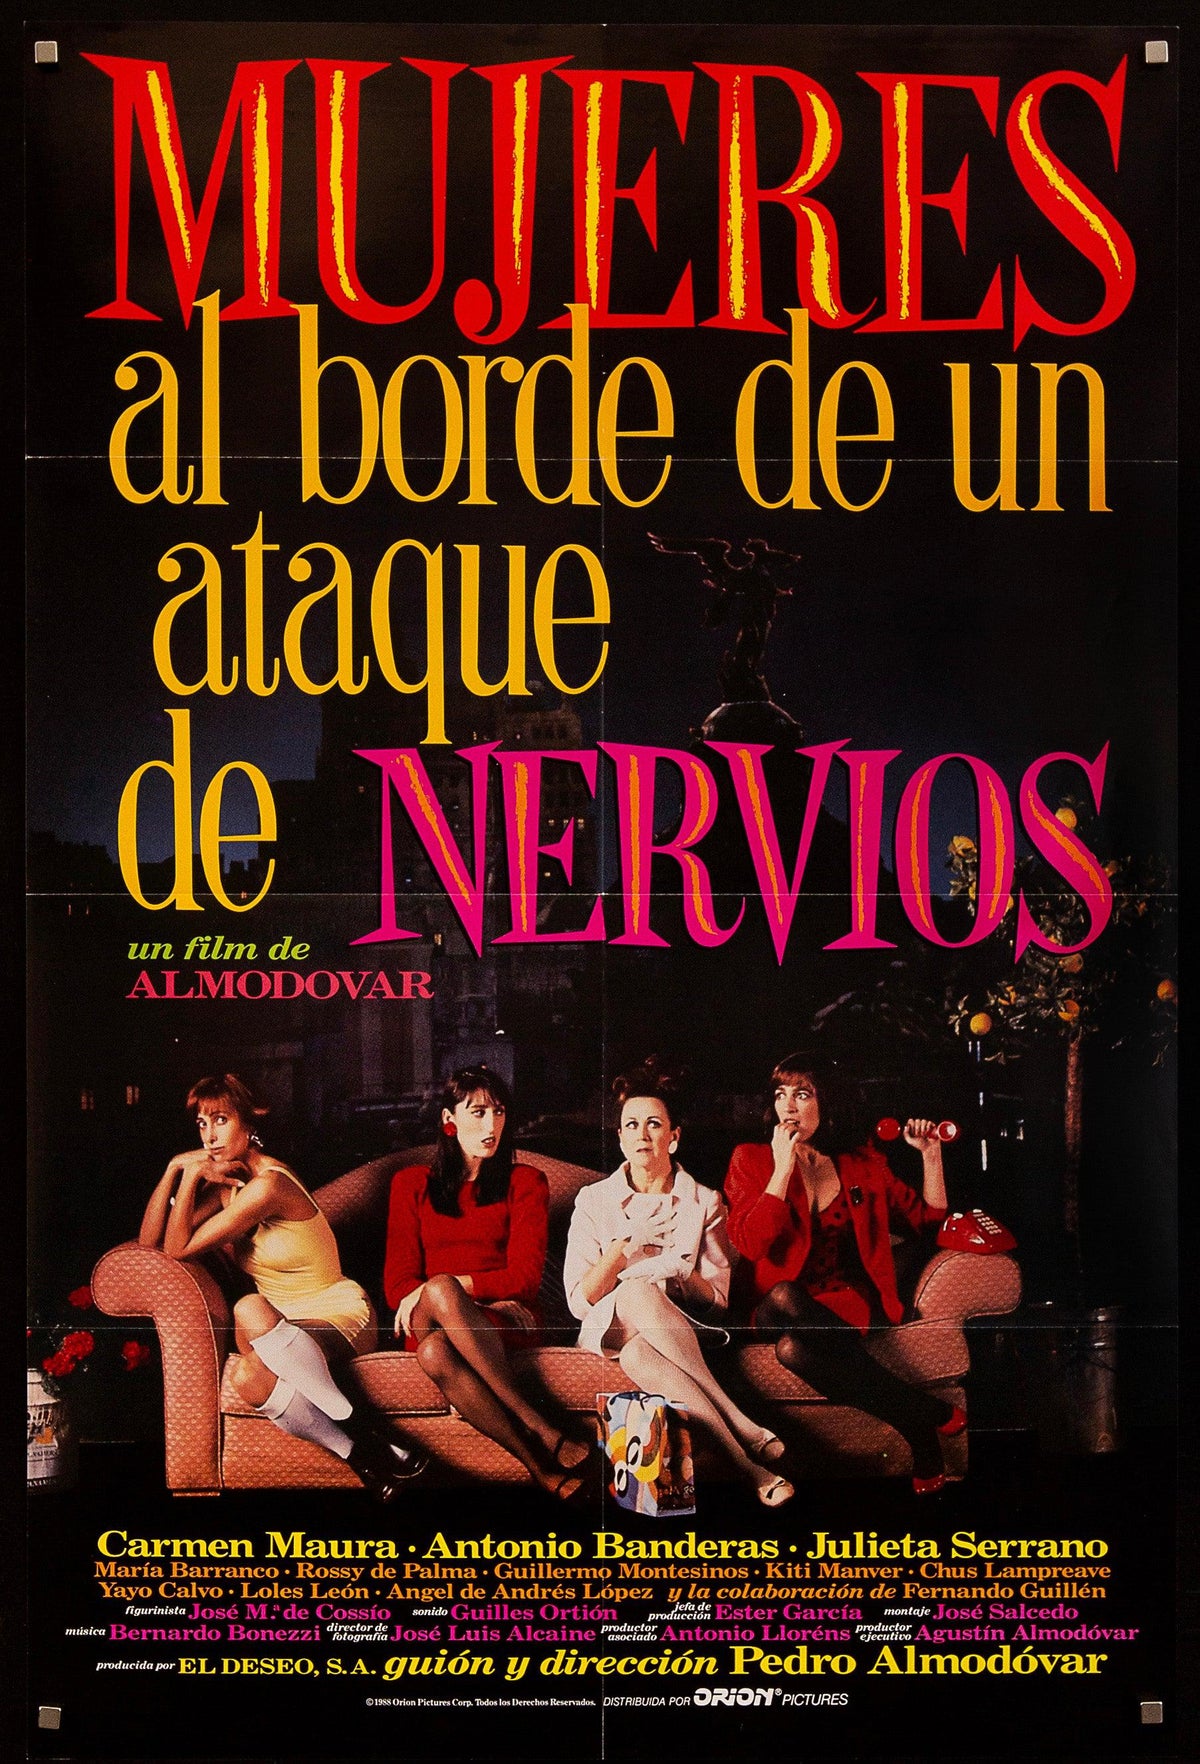 Women on the Verge of a Nervous Breakdown 1 Sheet (27x41) Original Vintage Movie Poster